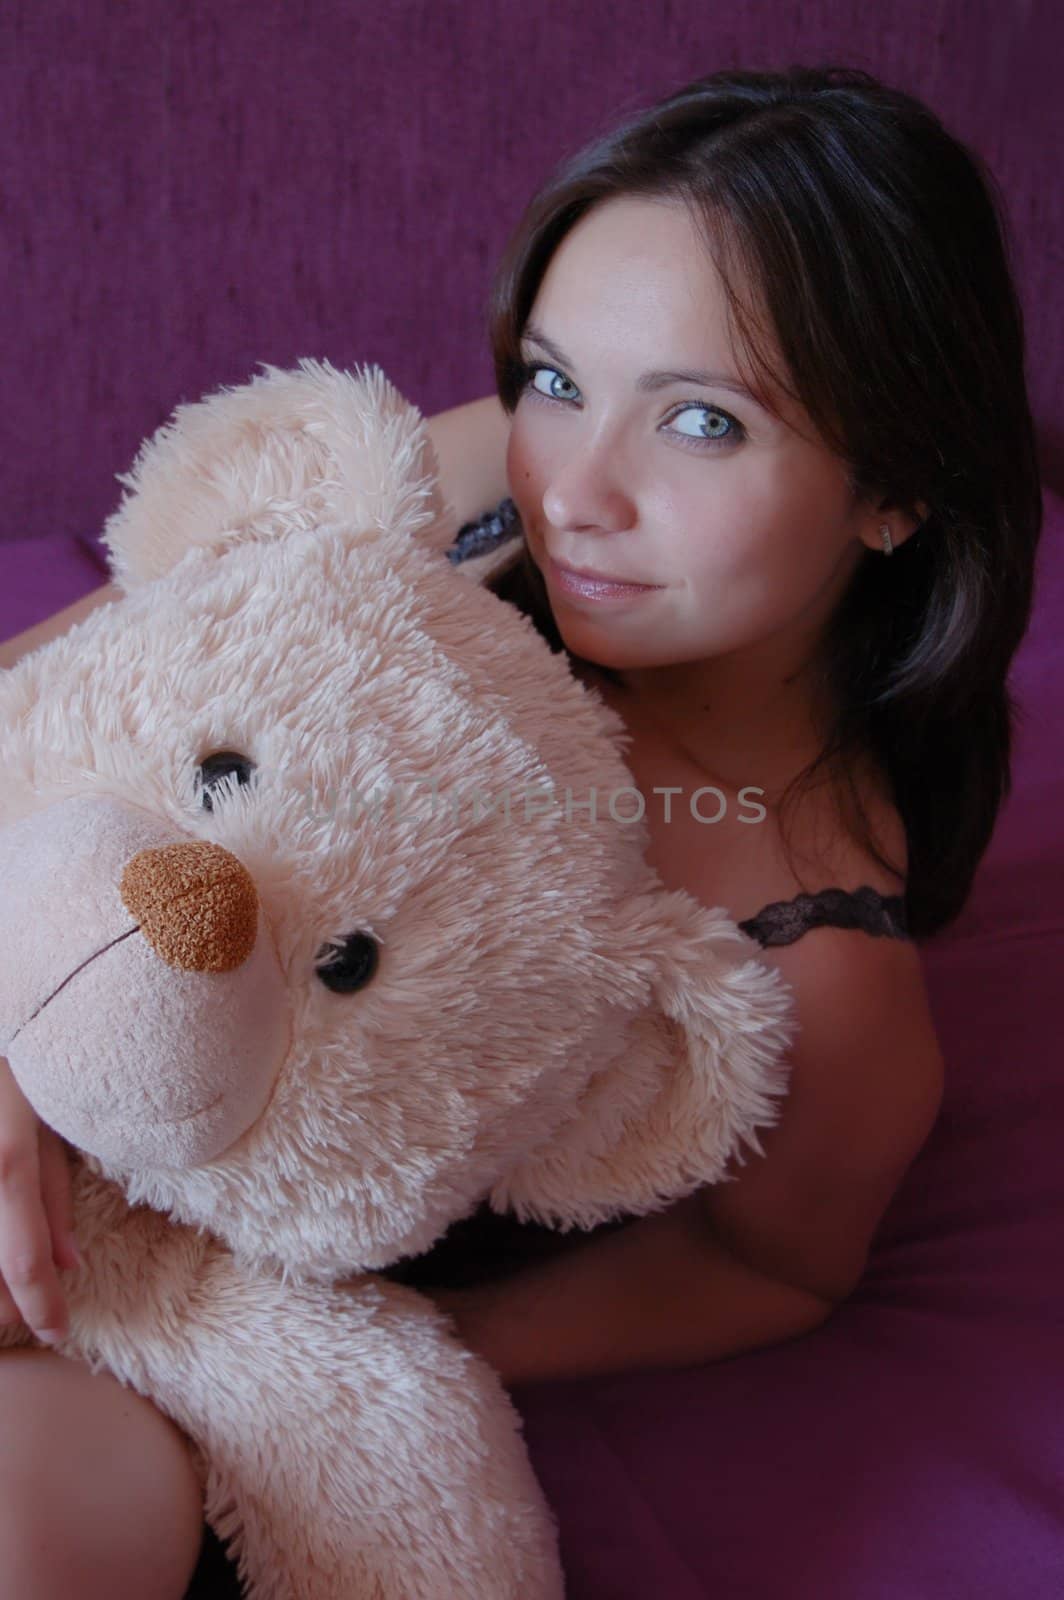 Beautiful girl with teddy bear